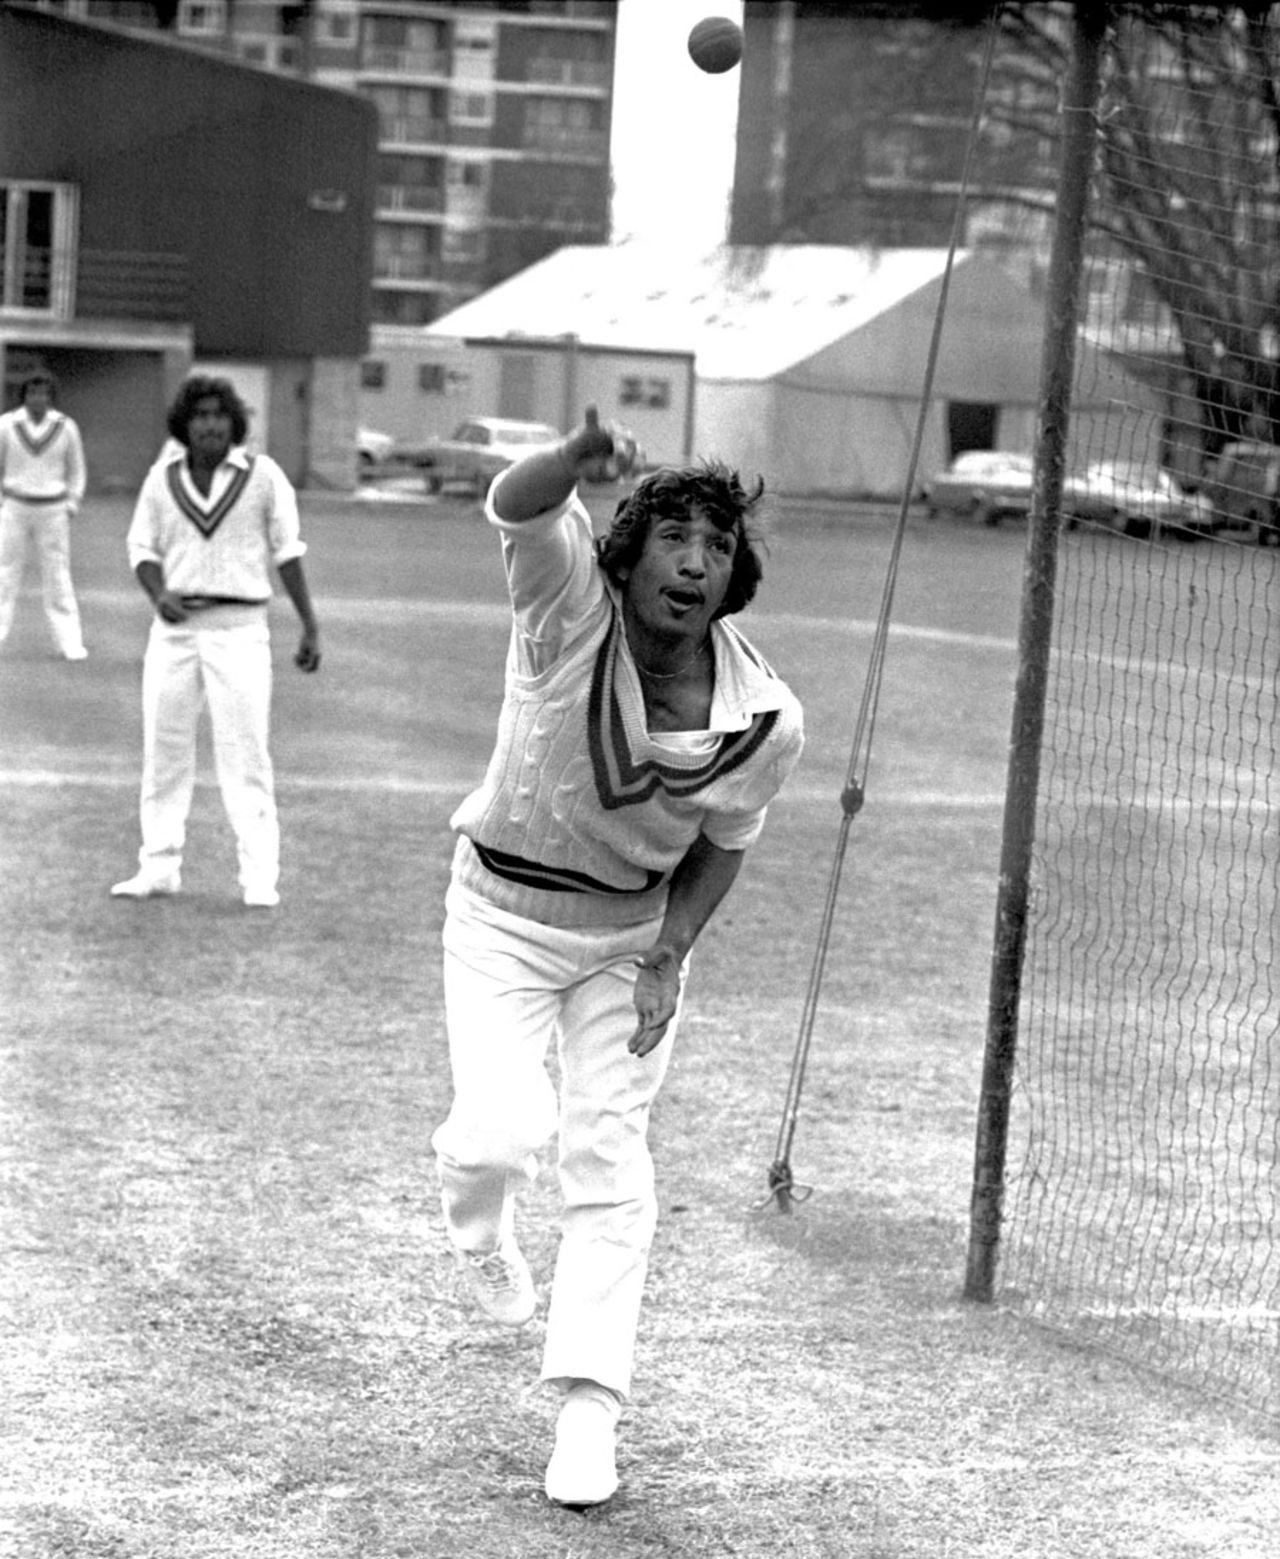 Abdul Qadir bowls in the nets, April 17, 1978